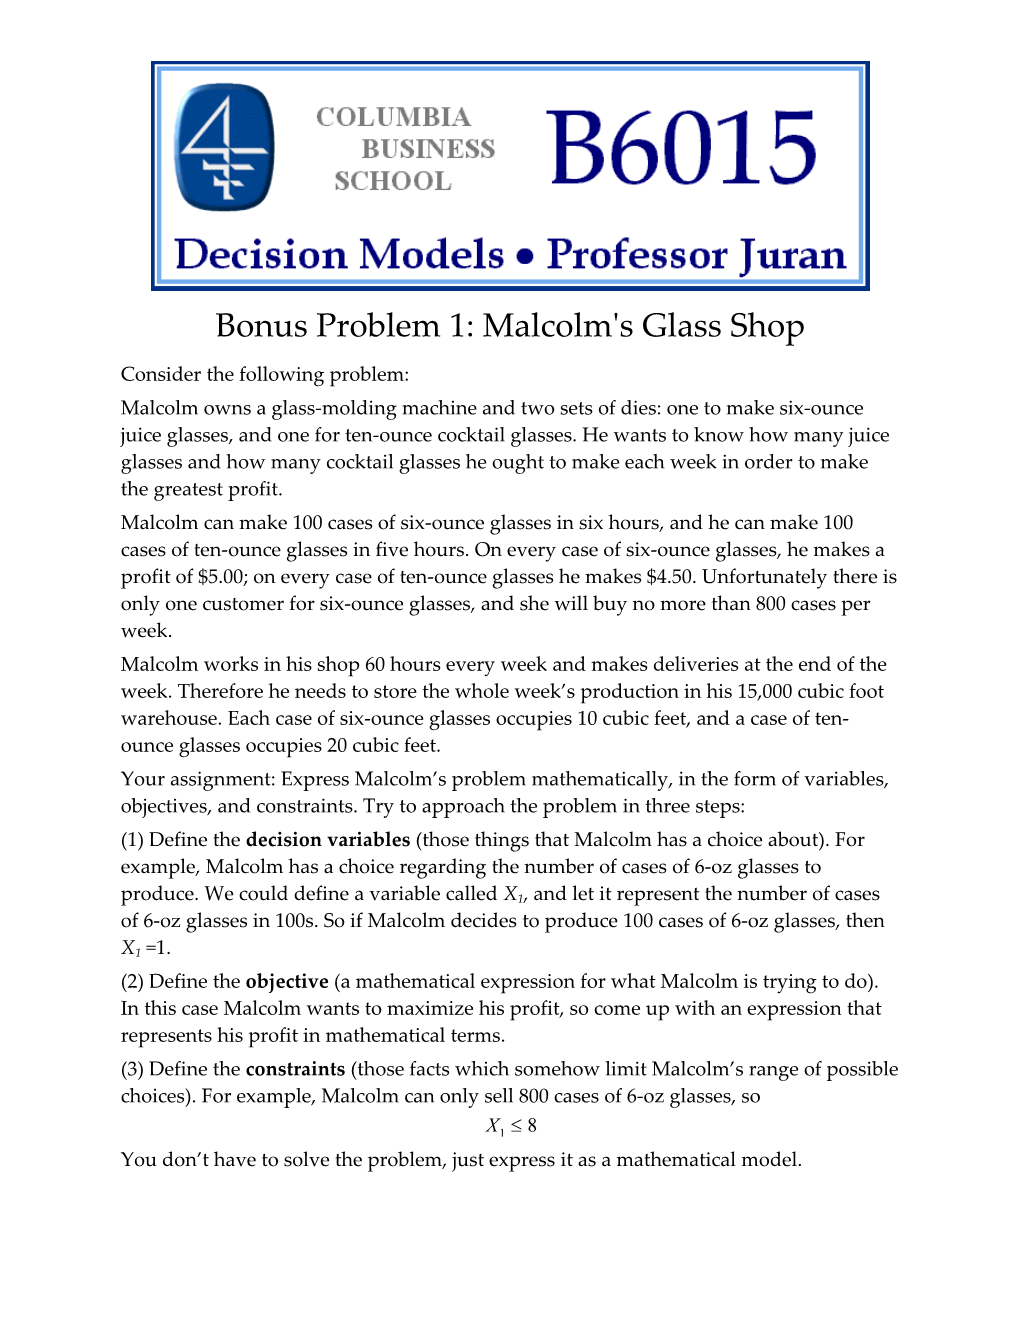 Bonus Problem 1: Malcolm's Glass Shop